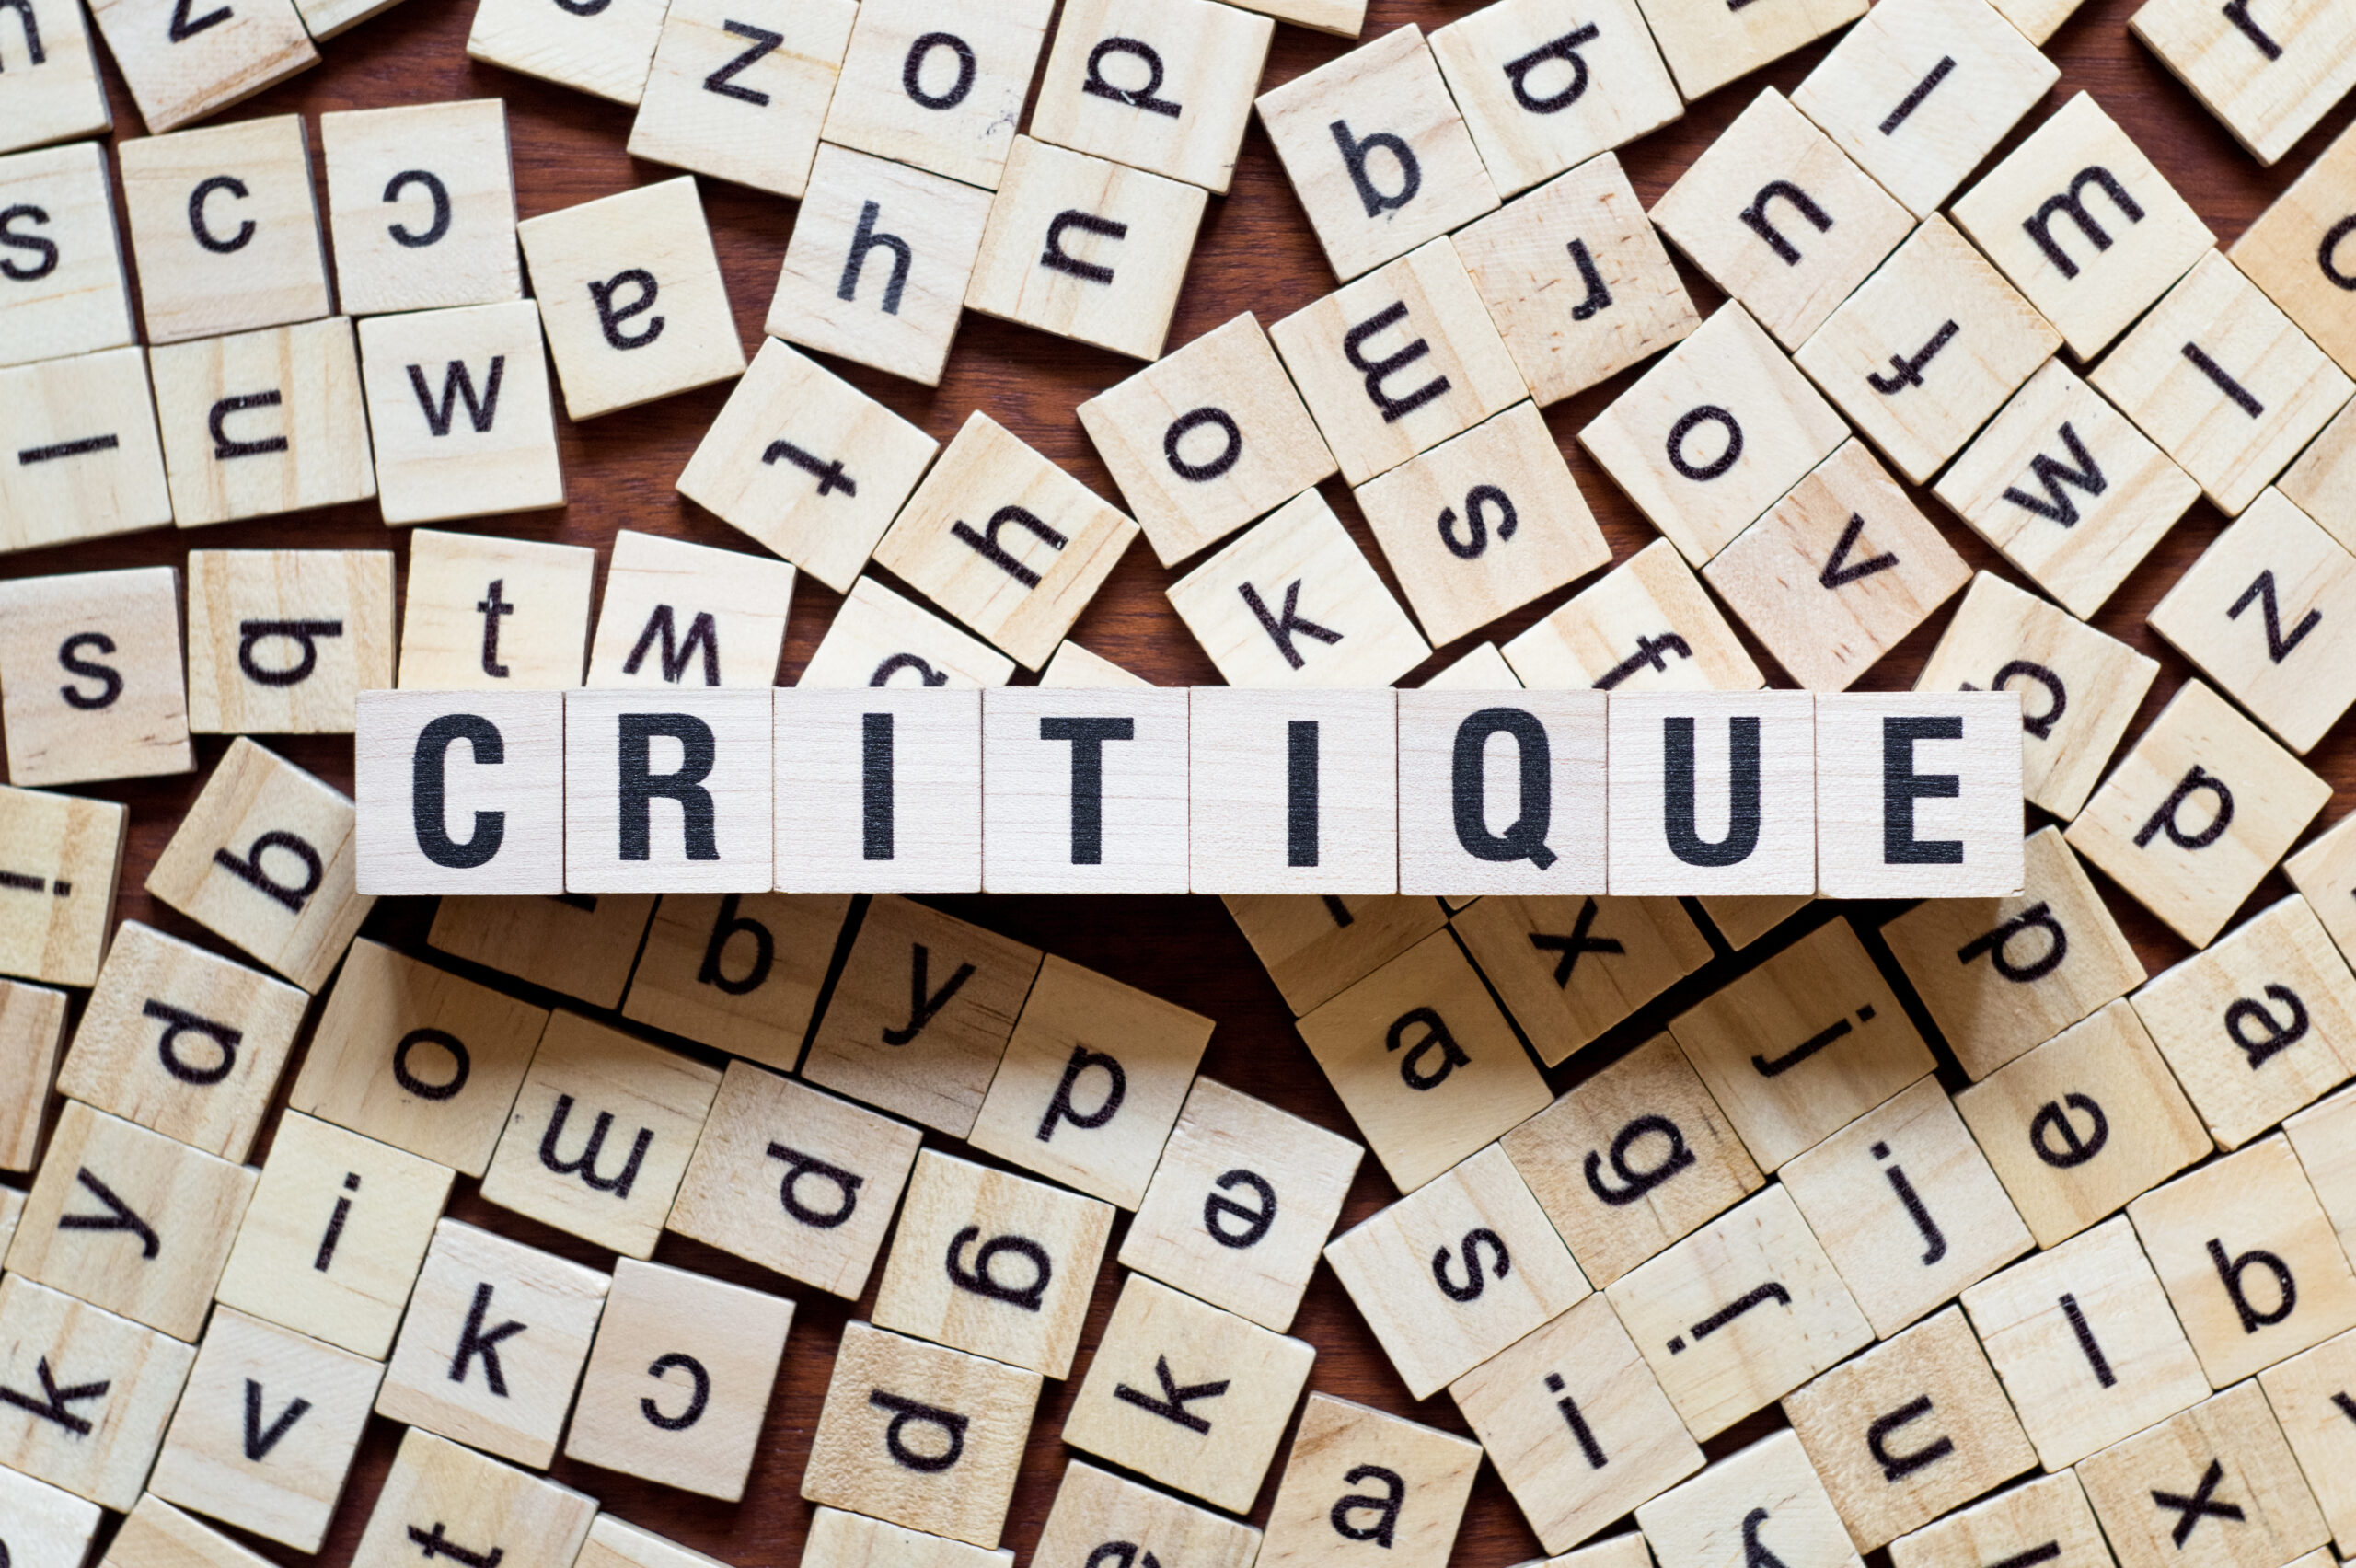 Critique spelled out in Scrabble tiles